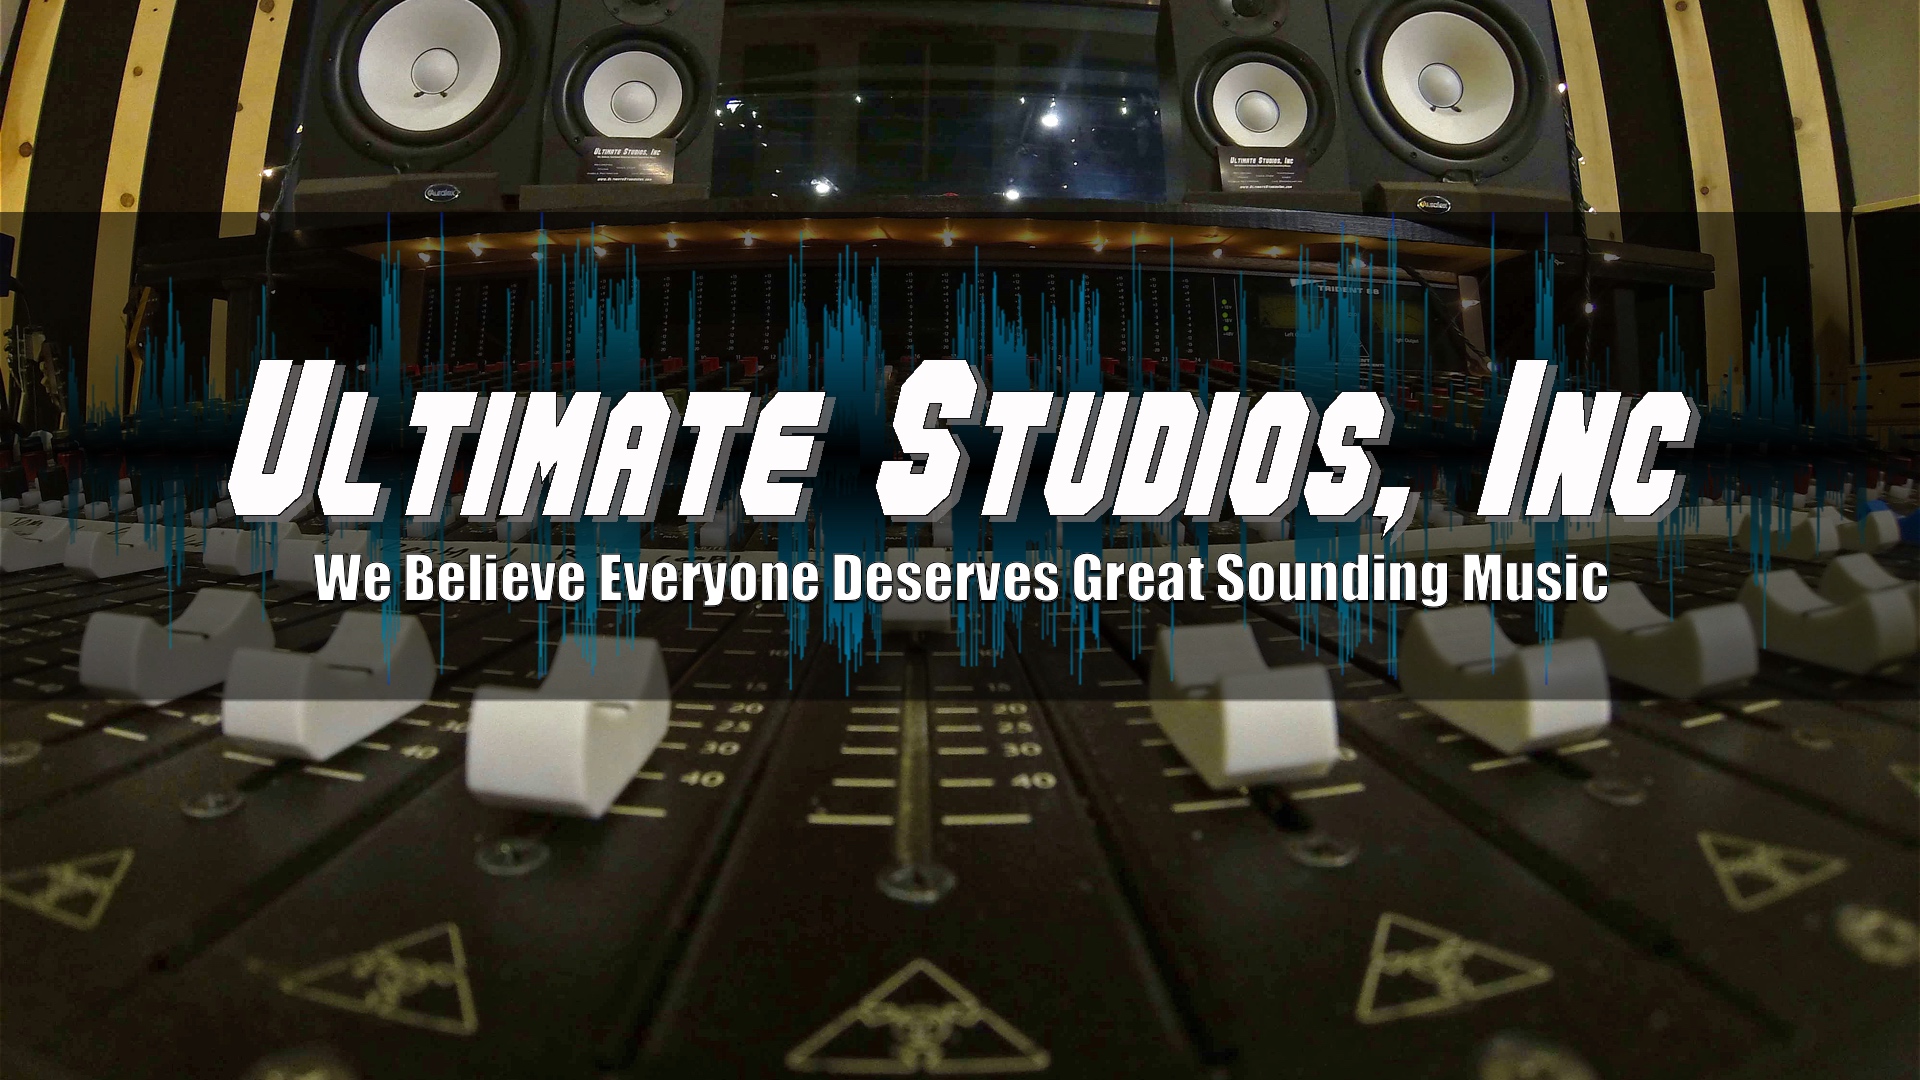 New Recording Studio Trailer!